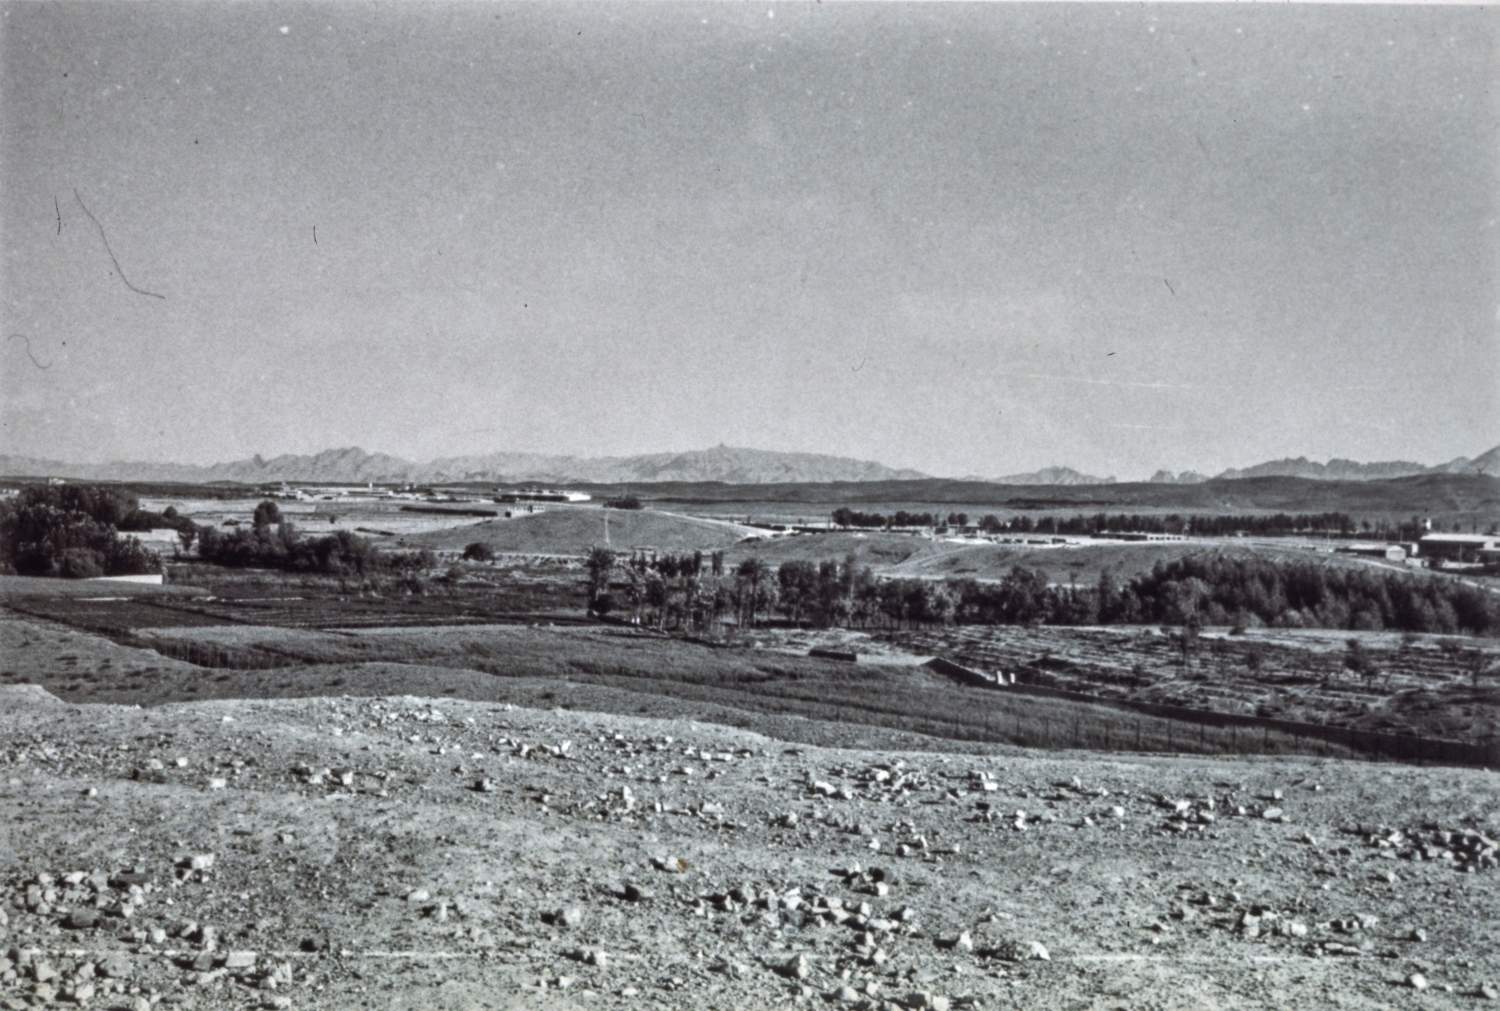 General view over surrounding landscape of Marabin (Marbin) Plain.